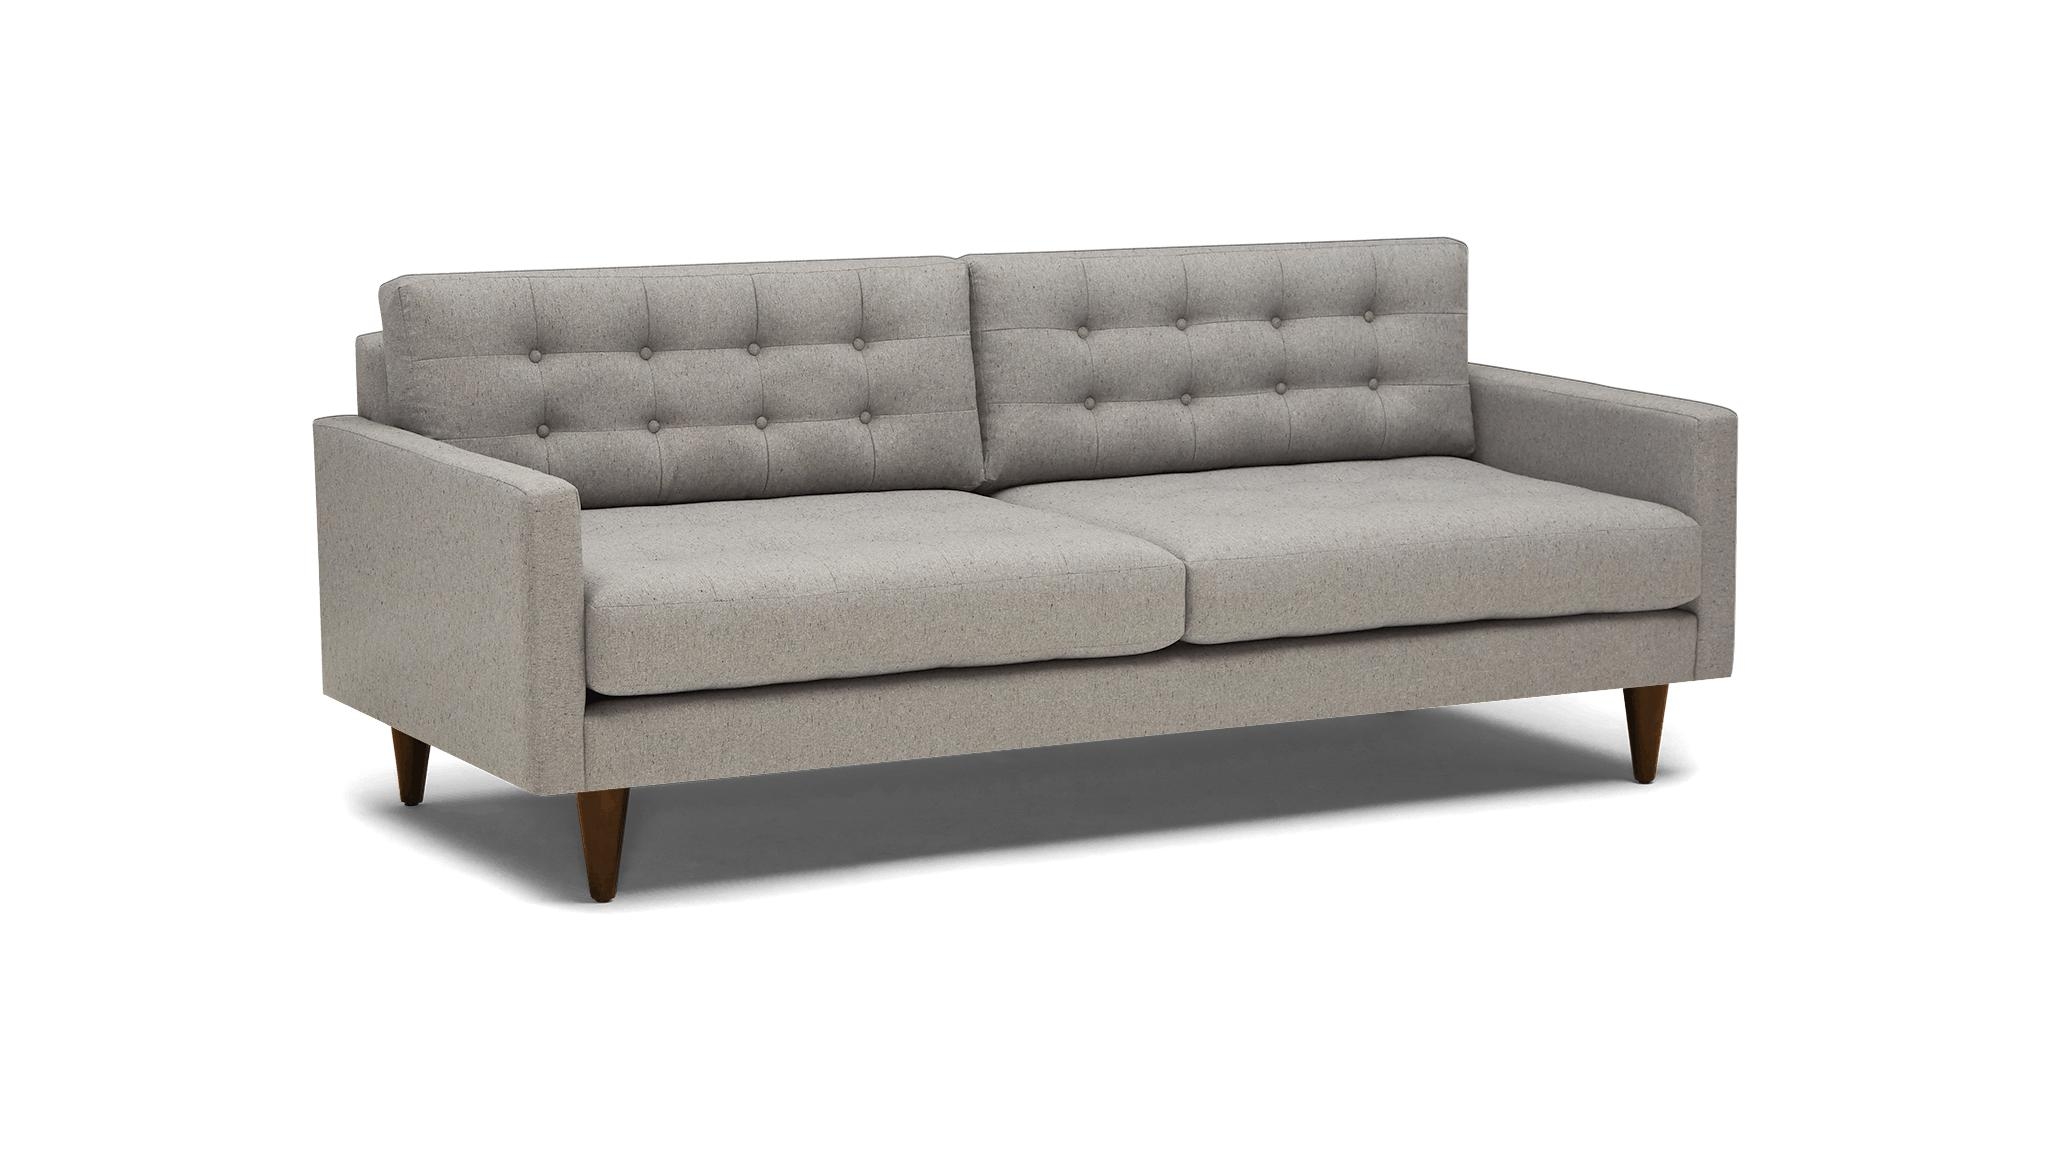 White Eliot Mid Century Modern Sofa - Bloke Cotton - Mocha - Image 1